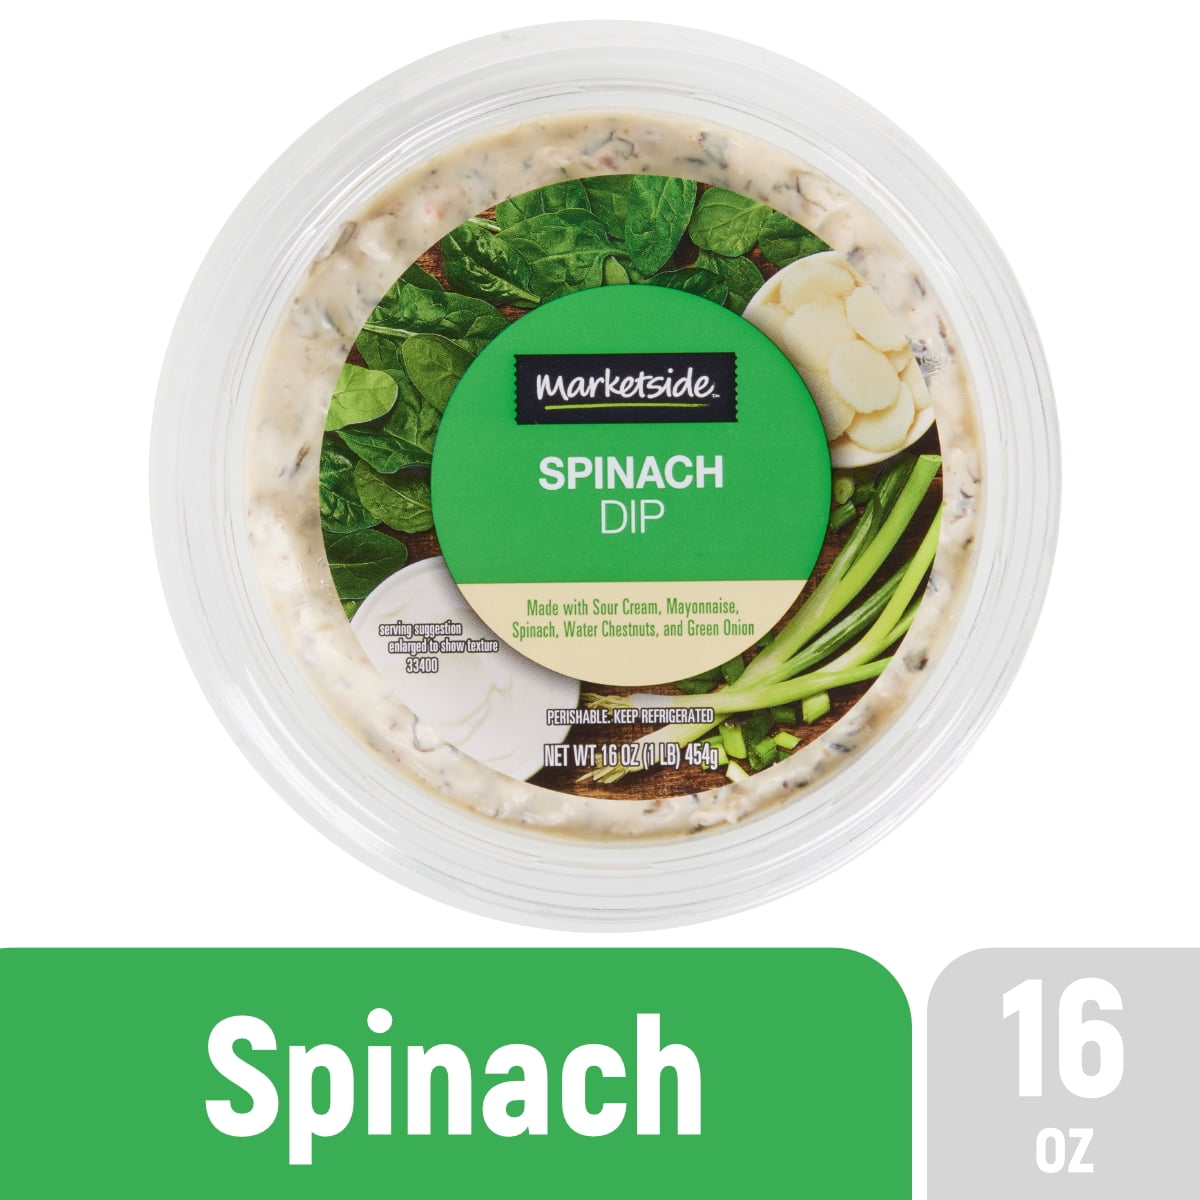 Marketside Premium Ready-To-Serve Spinach Dip Small Tub (16 oz, 1 Count)